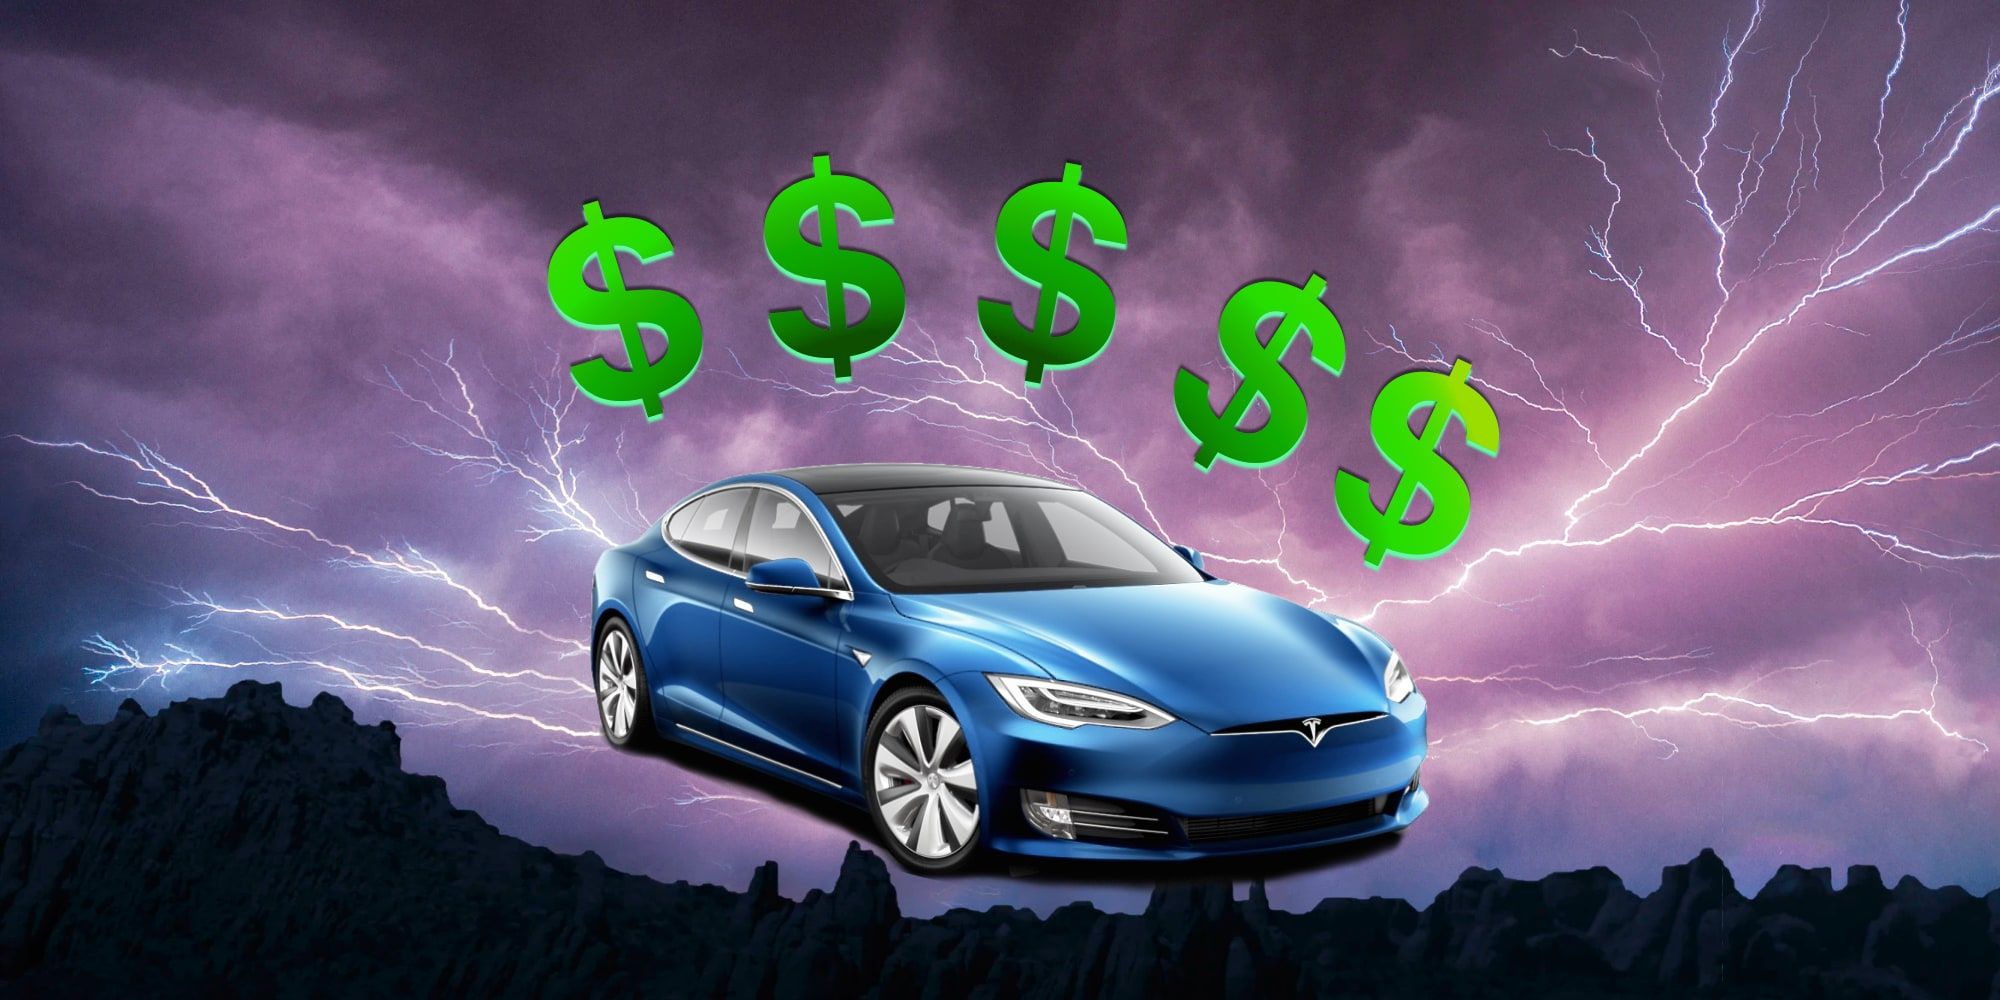 Tesla Model S Dollar Signs Lightning Storm BG